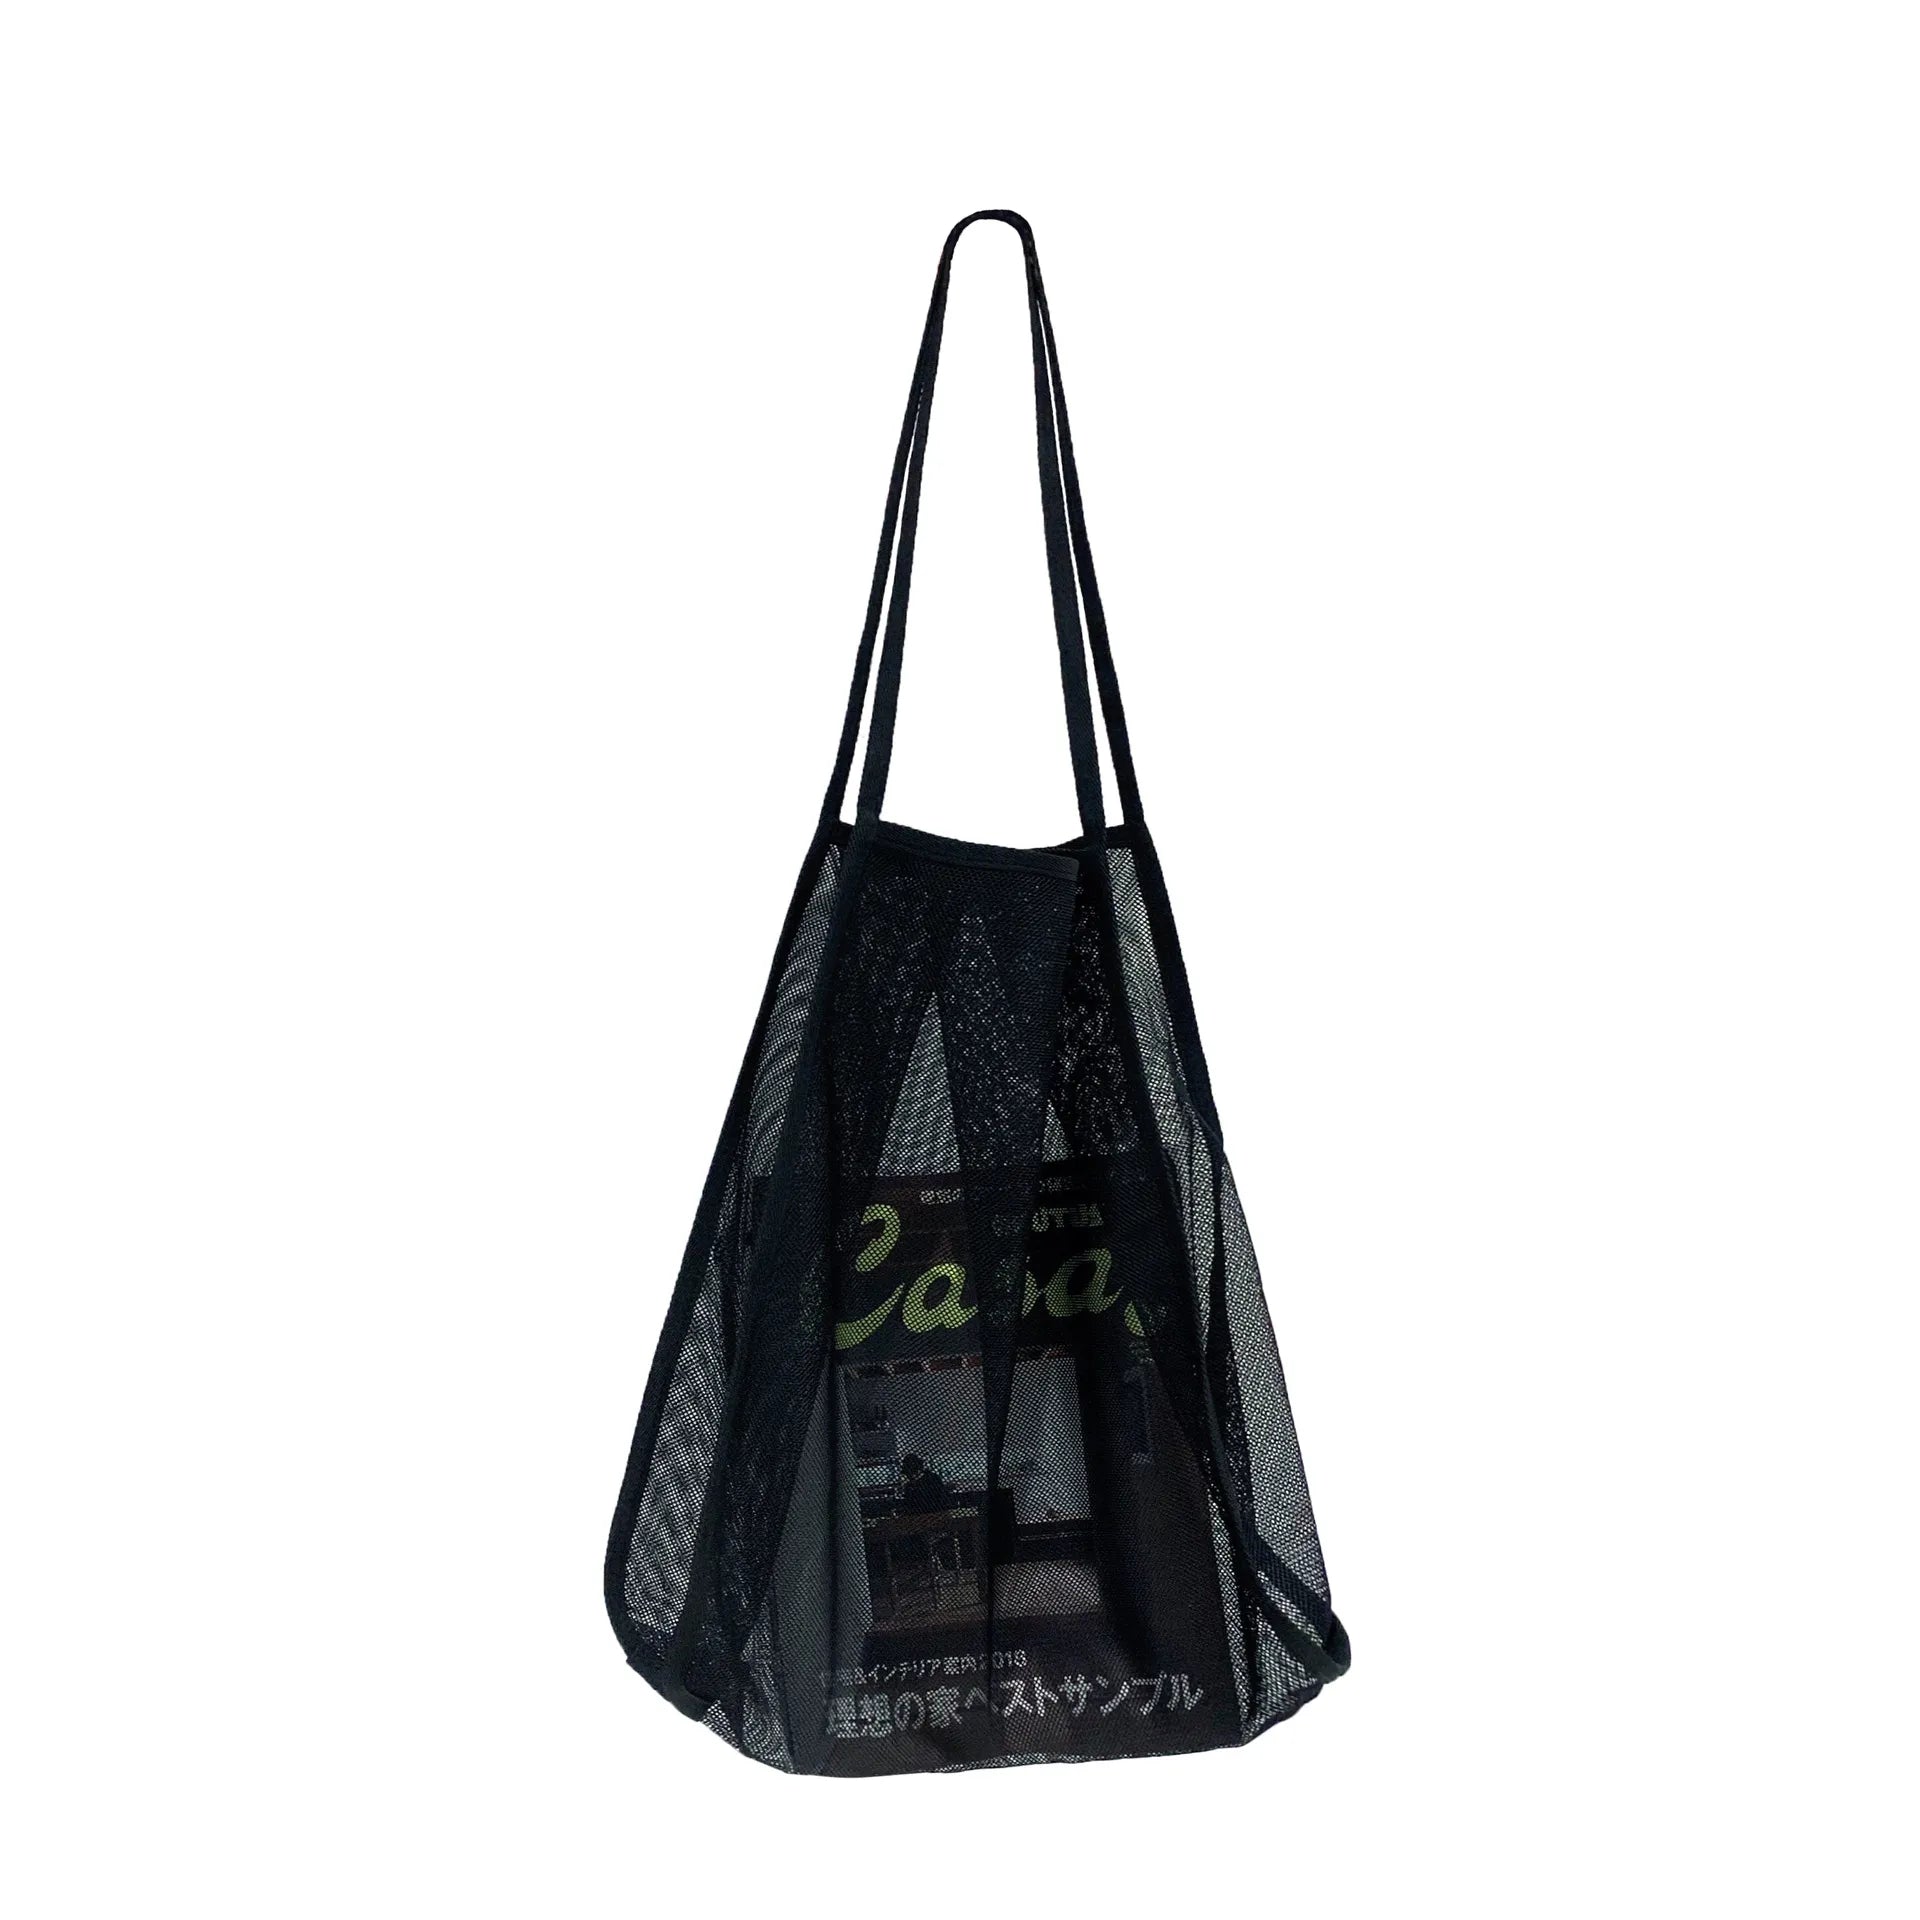 Hylhexyr Women&#39;S Shoulder Bag Mesh Totes Net Beach Bag Foldable Handbag Fruit Grocery Shopping Bags Fashion Large Capacity